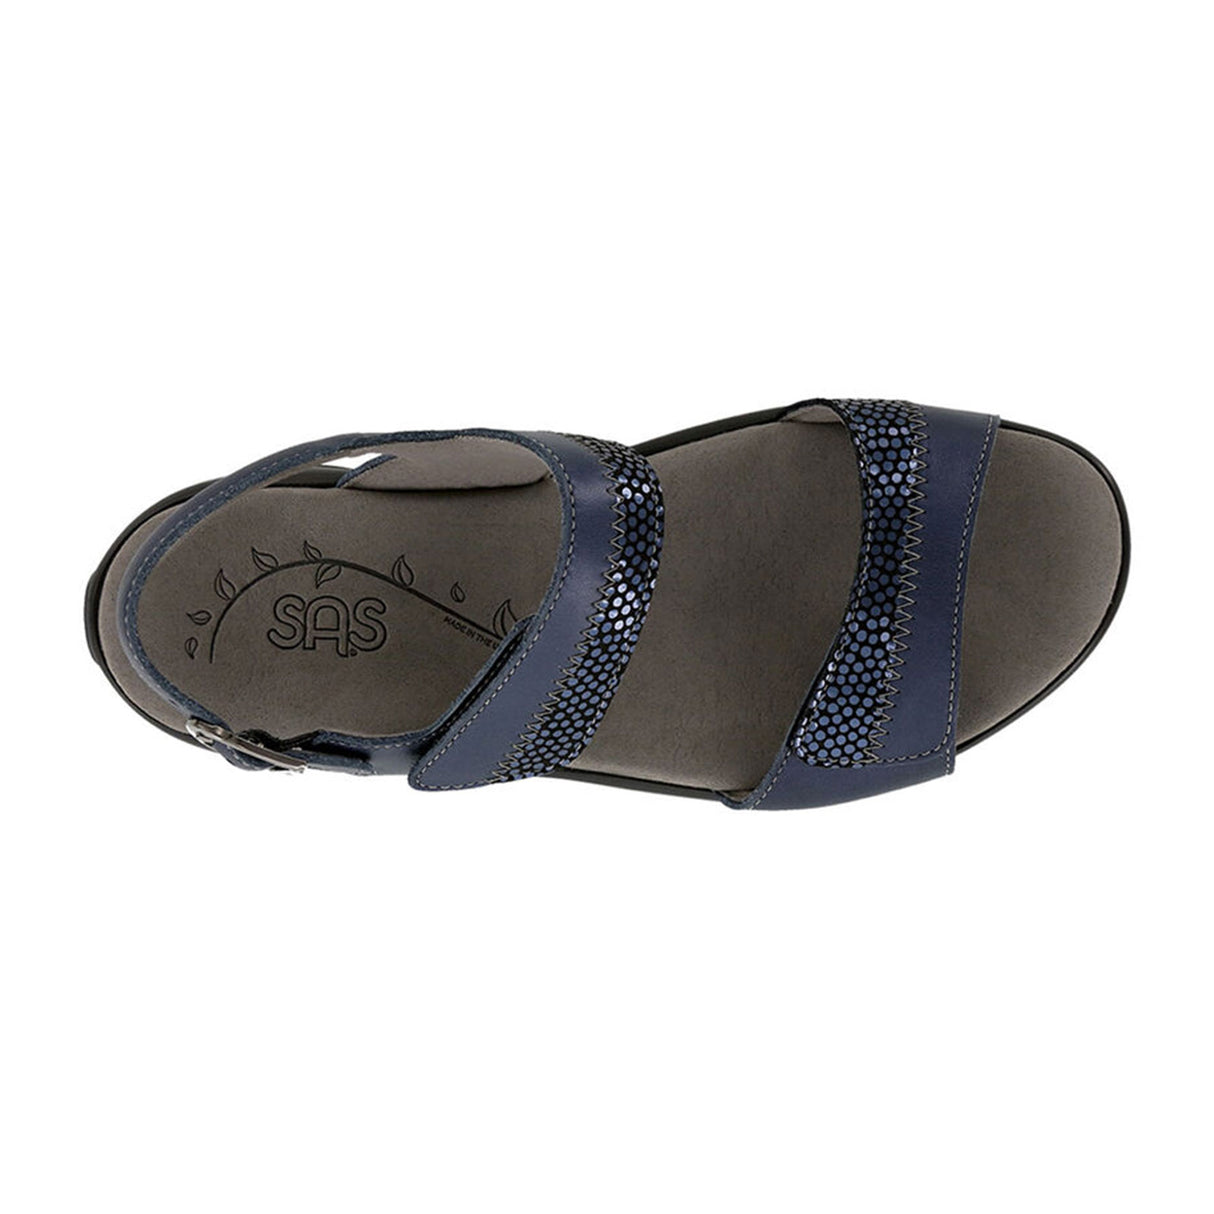 SAS Nudu Backstrap Sandal (Women) - Navy Sandals - Backstrap - The Heel Shoe Fitters